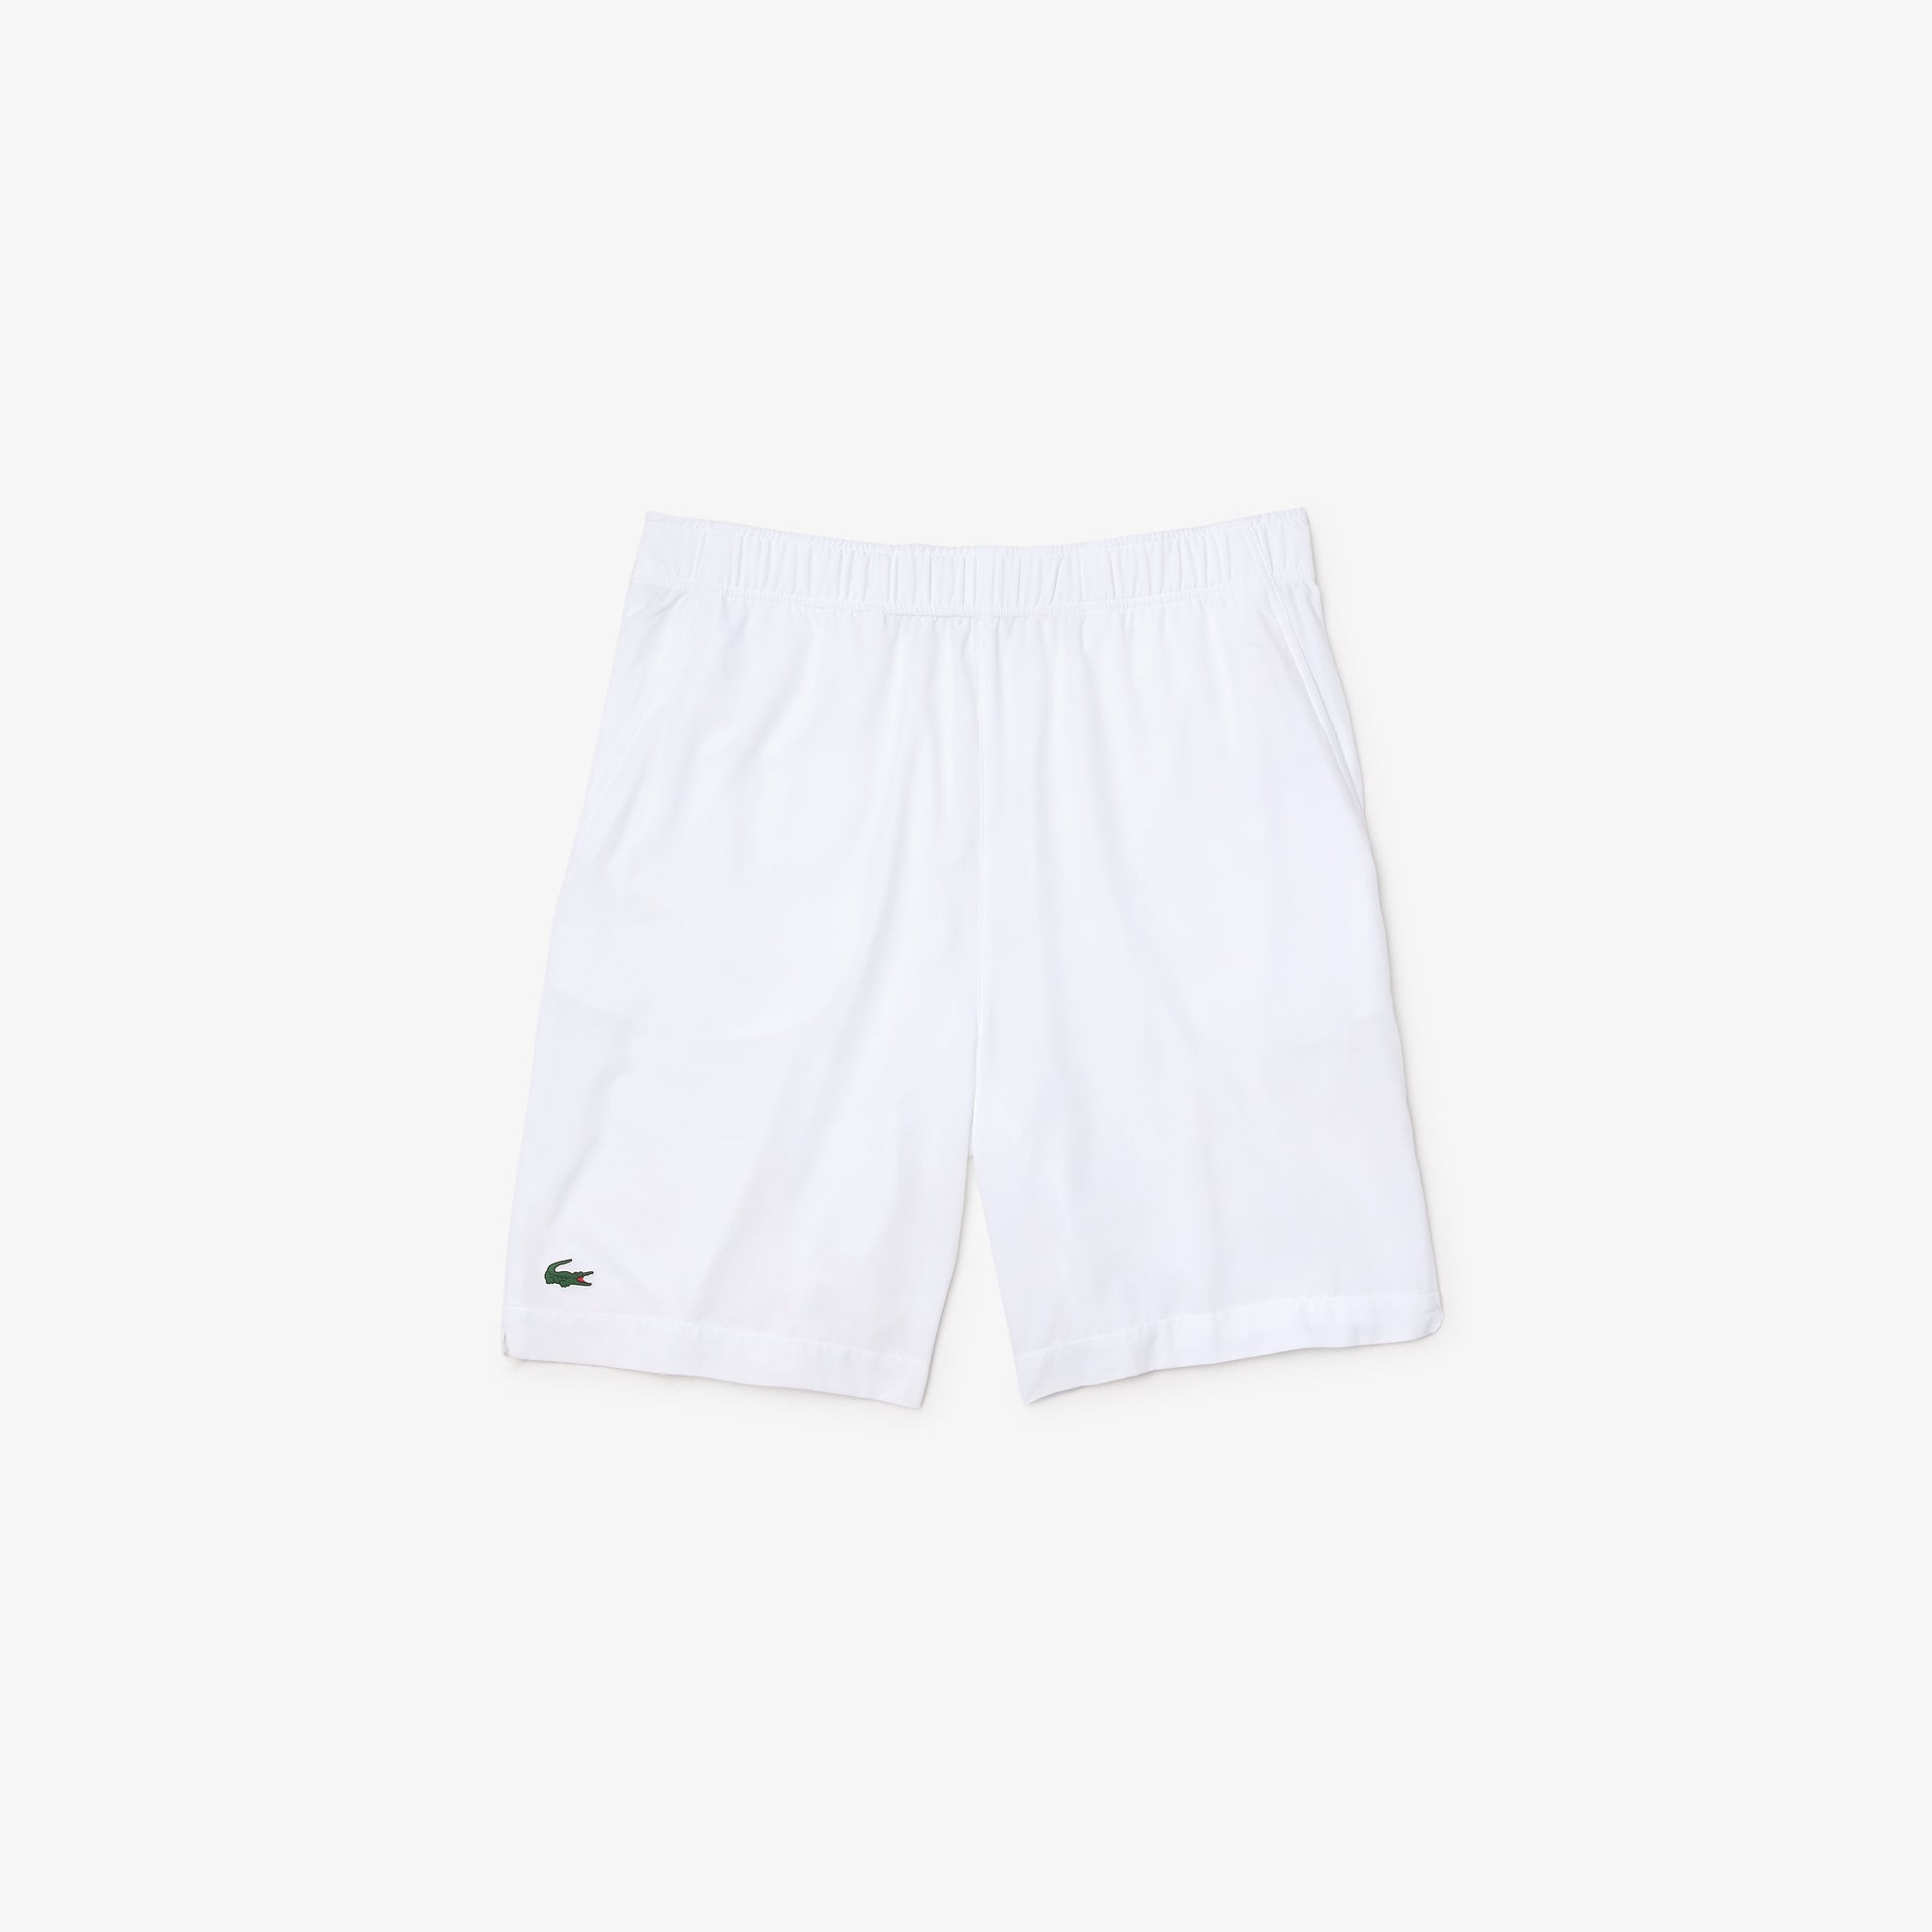 Lacoste Shorts (Blanc/Navy) - M